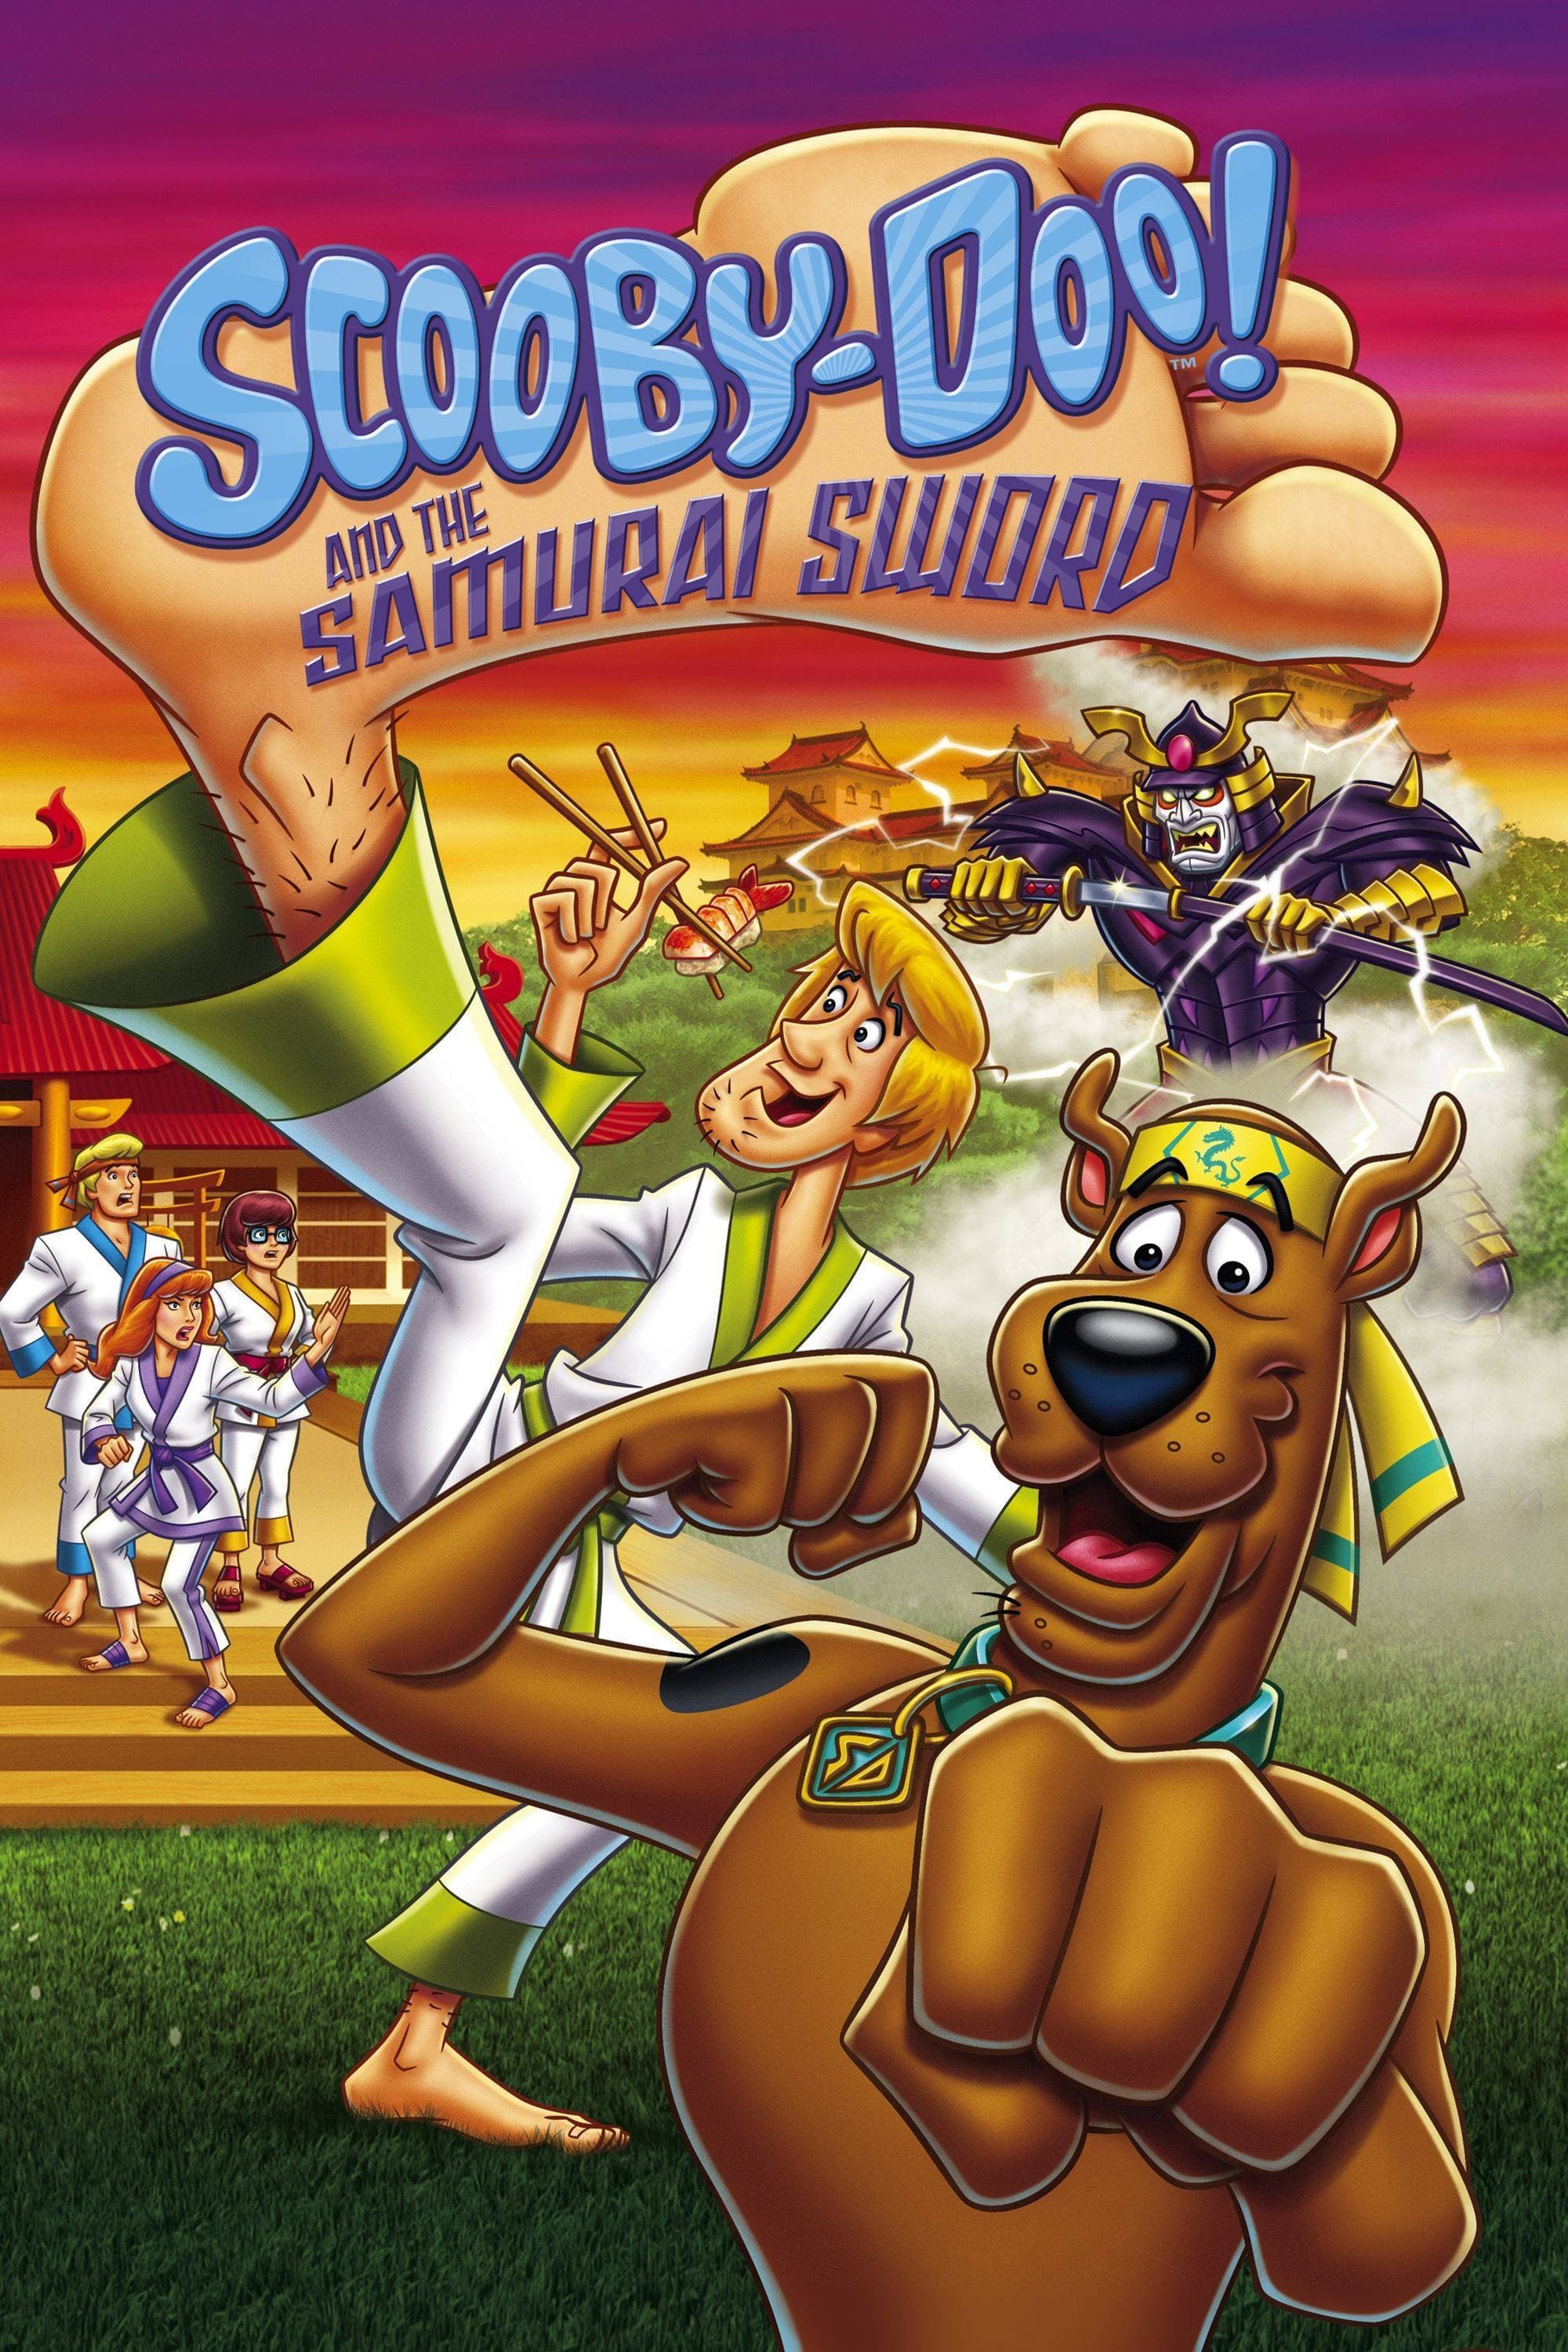 Scooby-Doo! e a Espada do Samurai